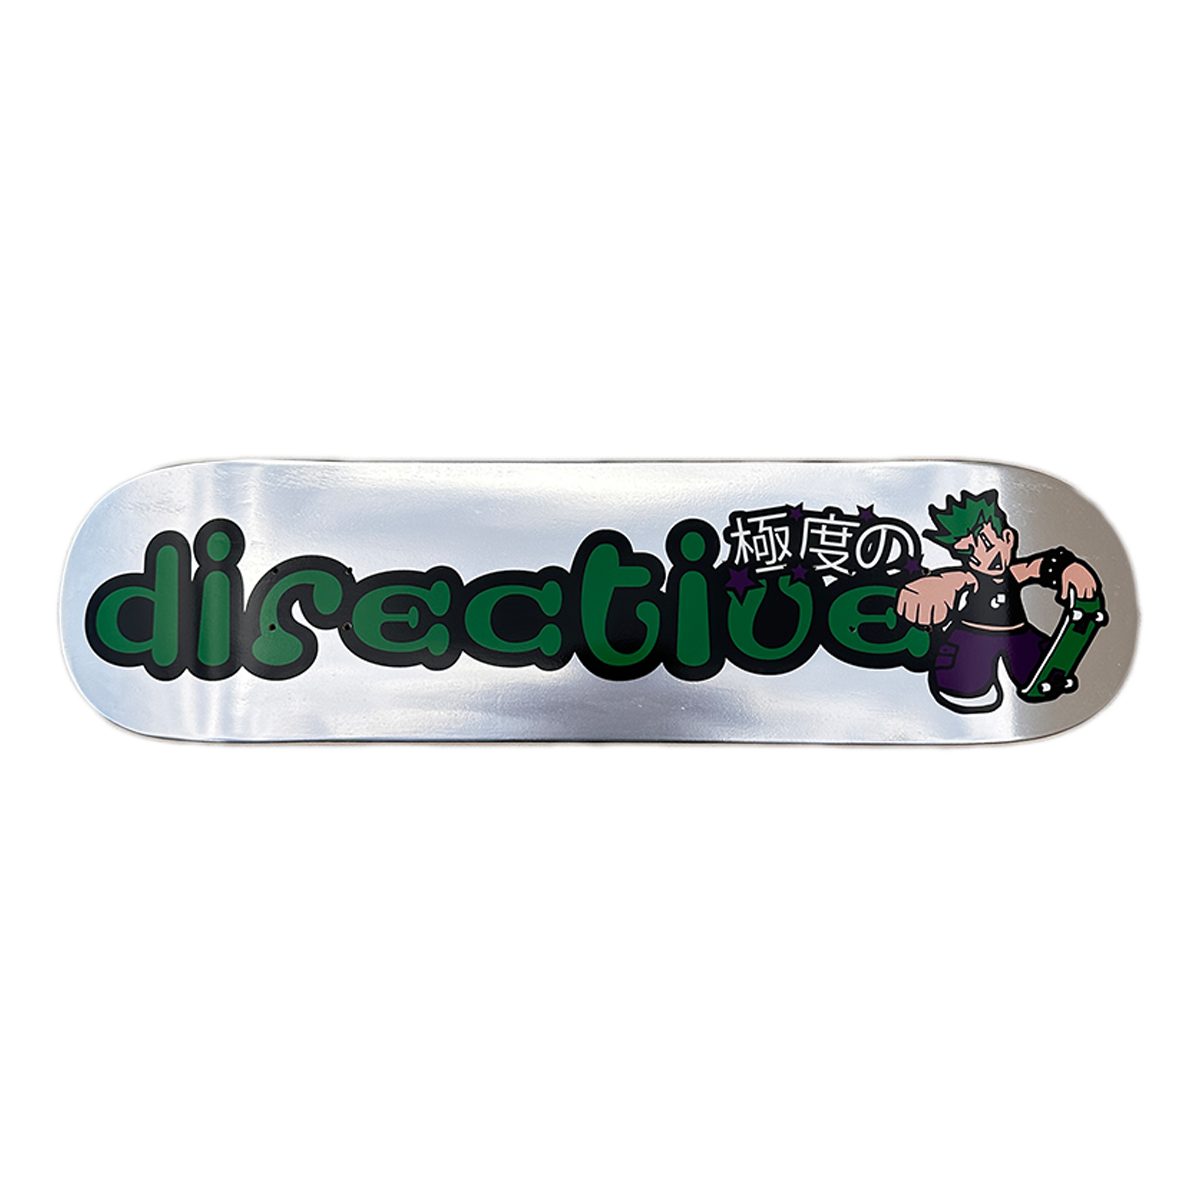 Directive Extreme Skate Deck - Silver Foil